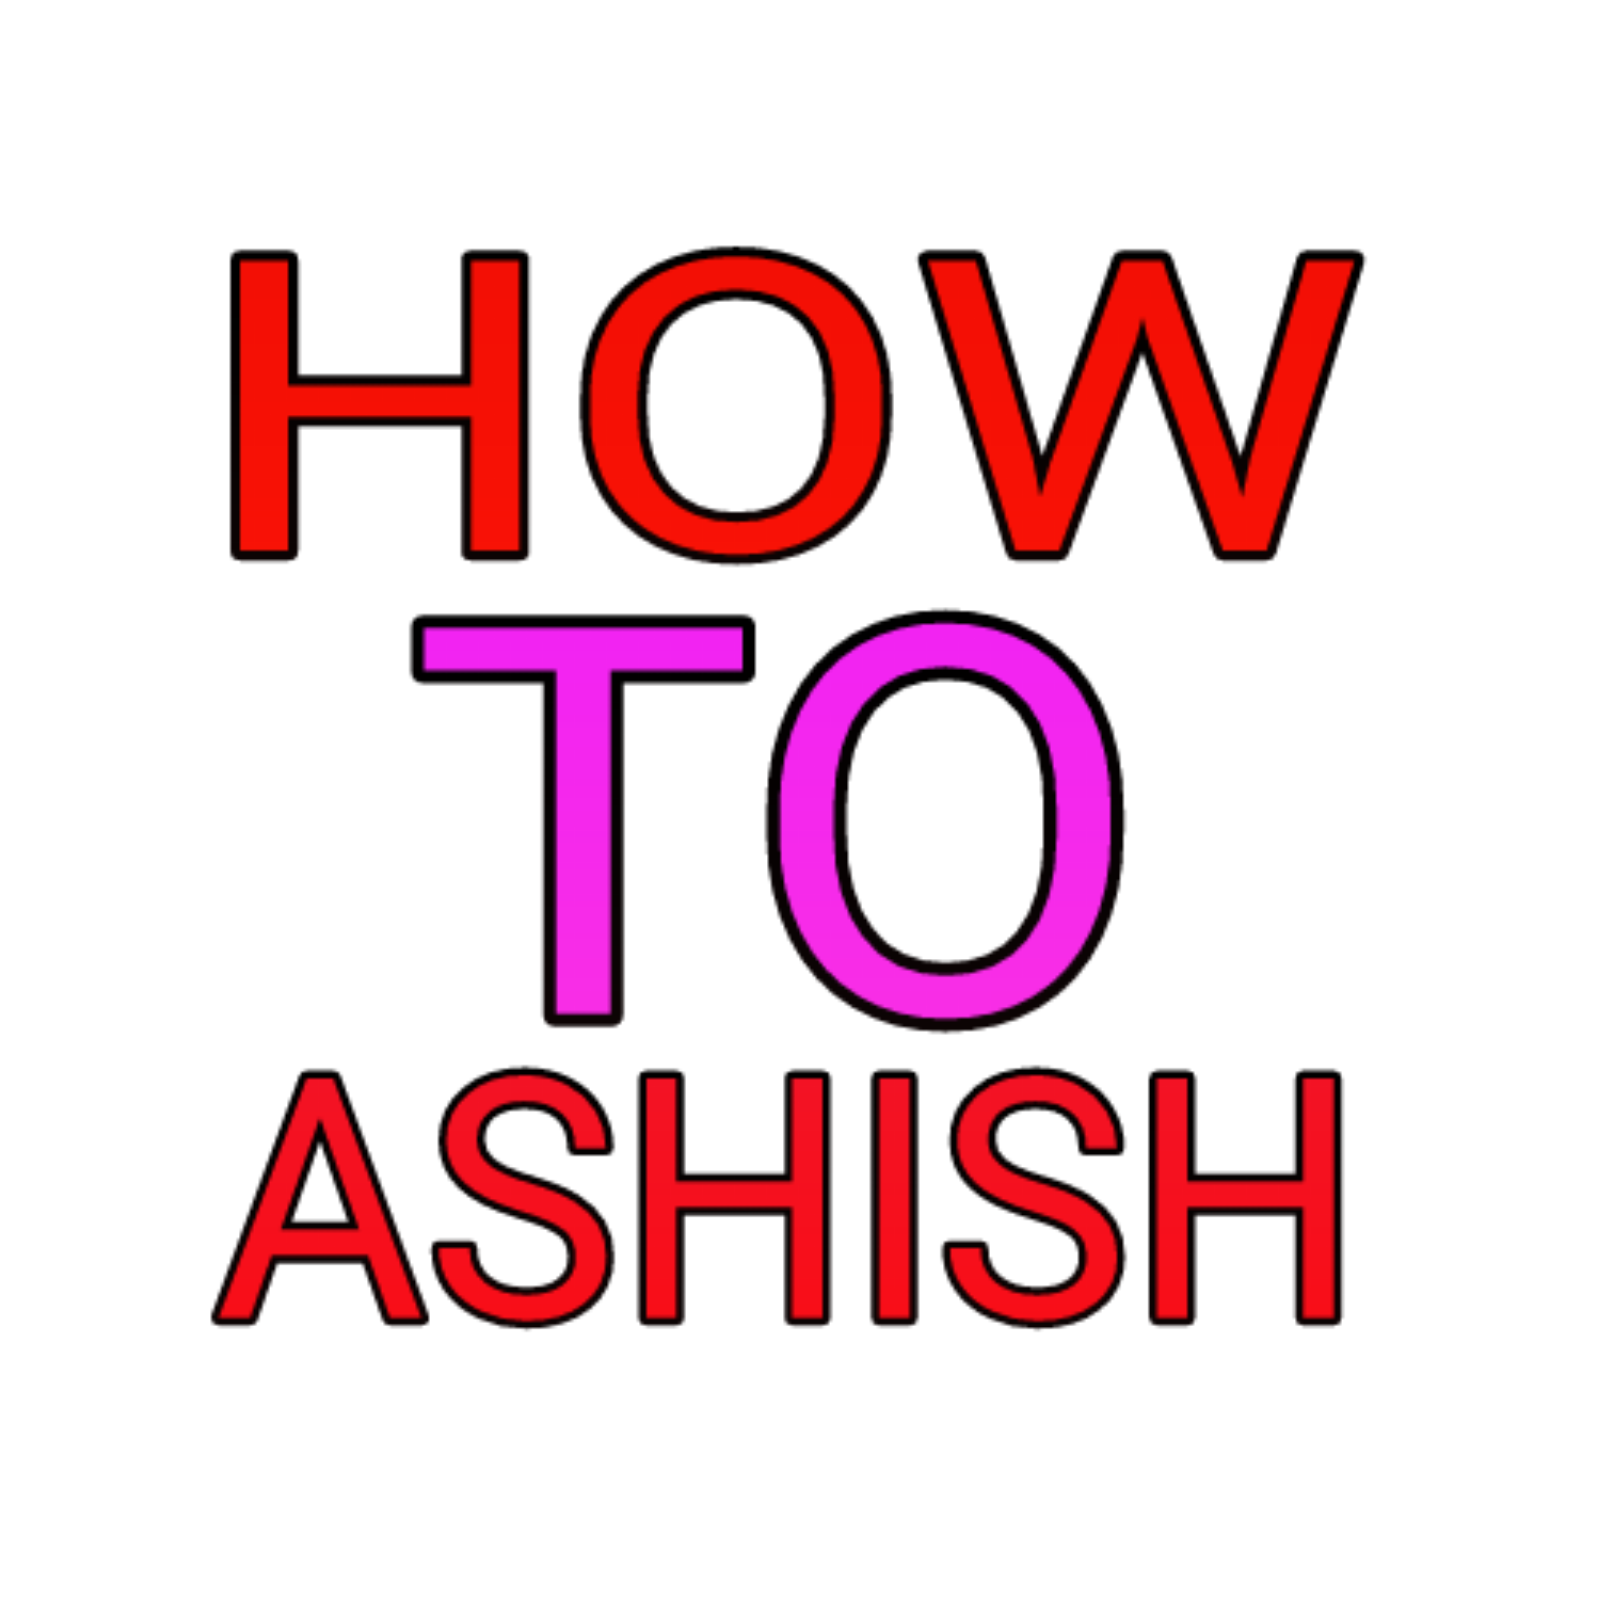 How to ashish